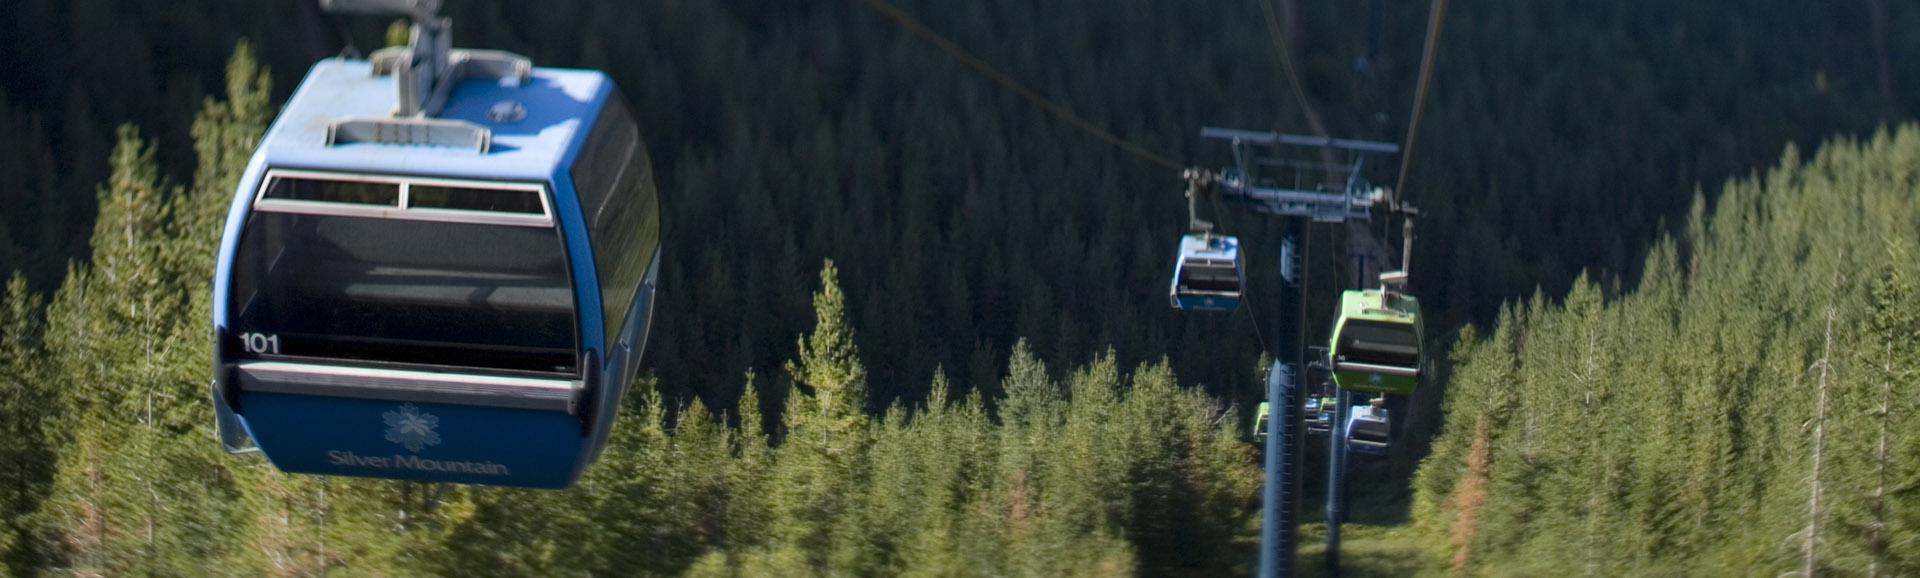 Scenic Gondola Rides desktop image